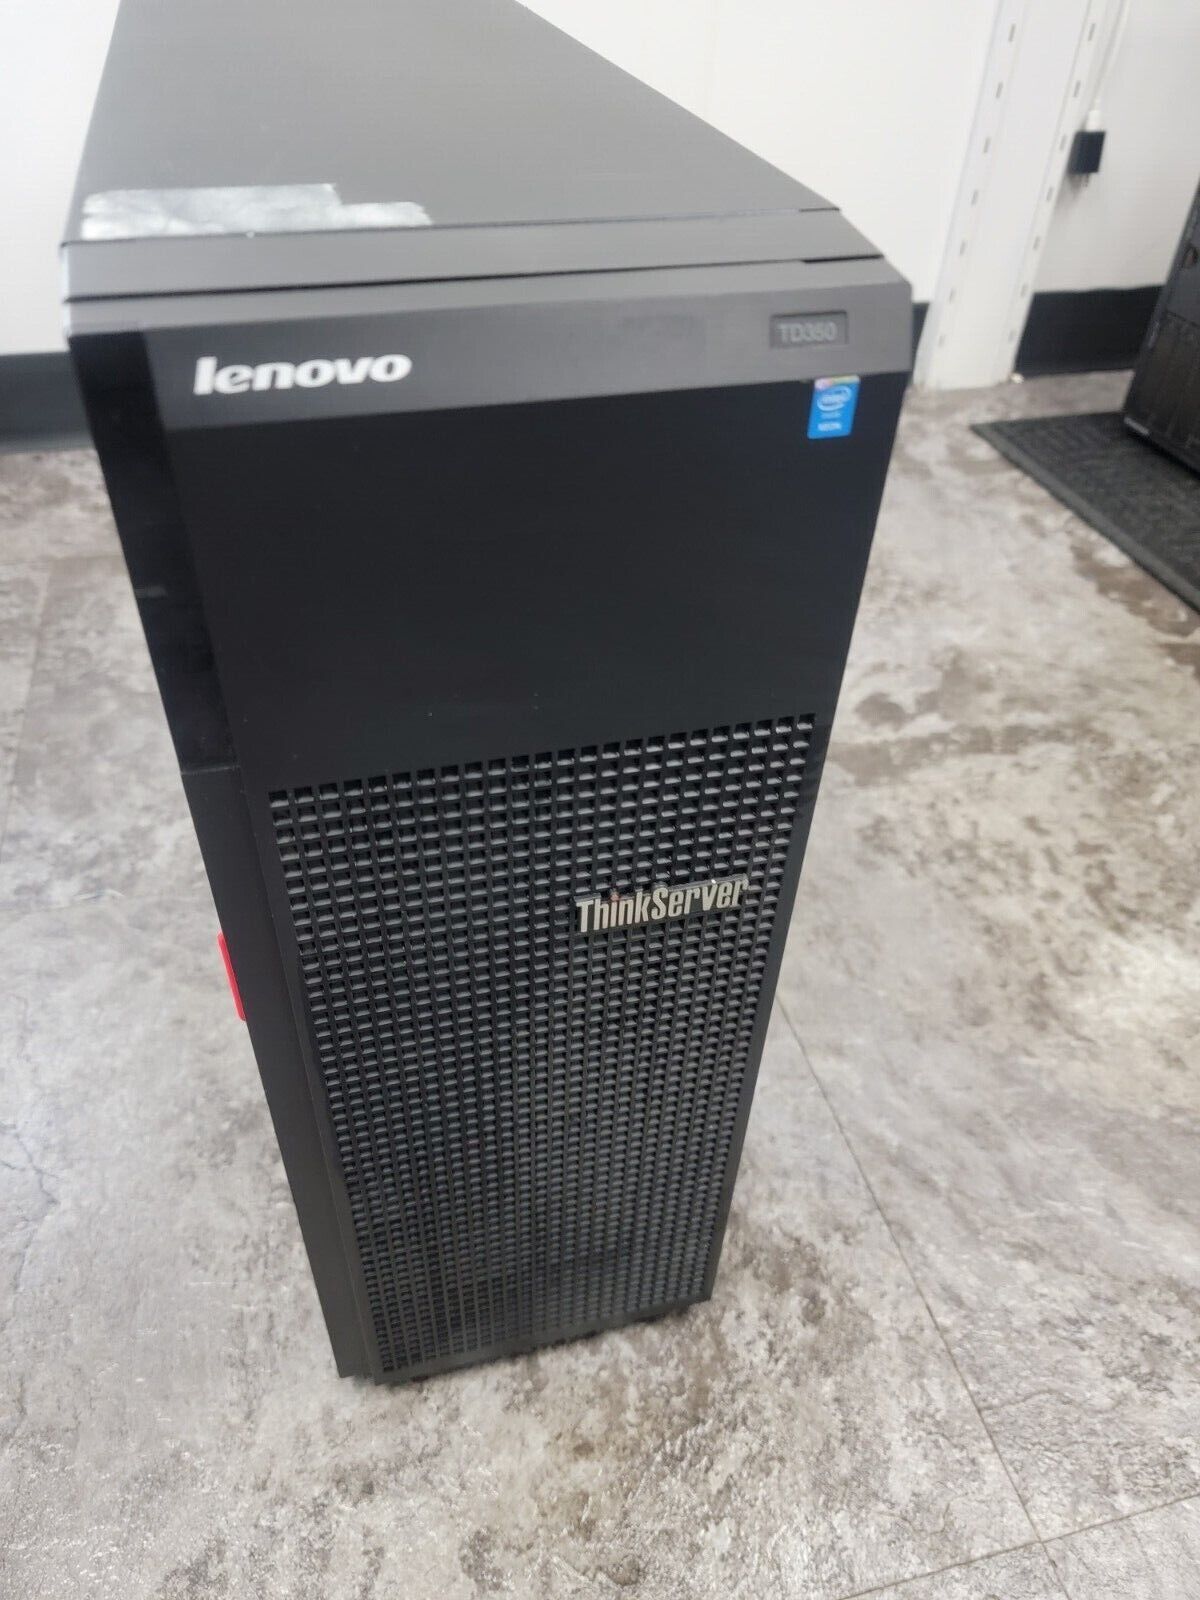 Lenovo ThinkServer TD350 70DG - Server - tower - 4U - 2-way - 1 x Xeon